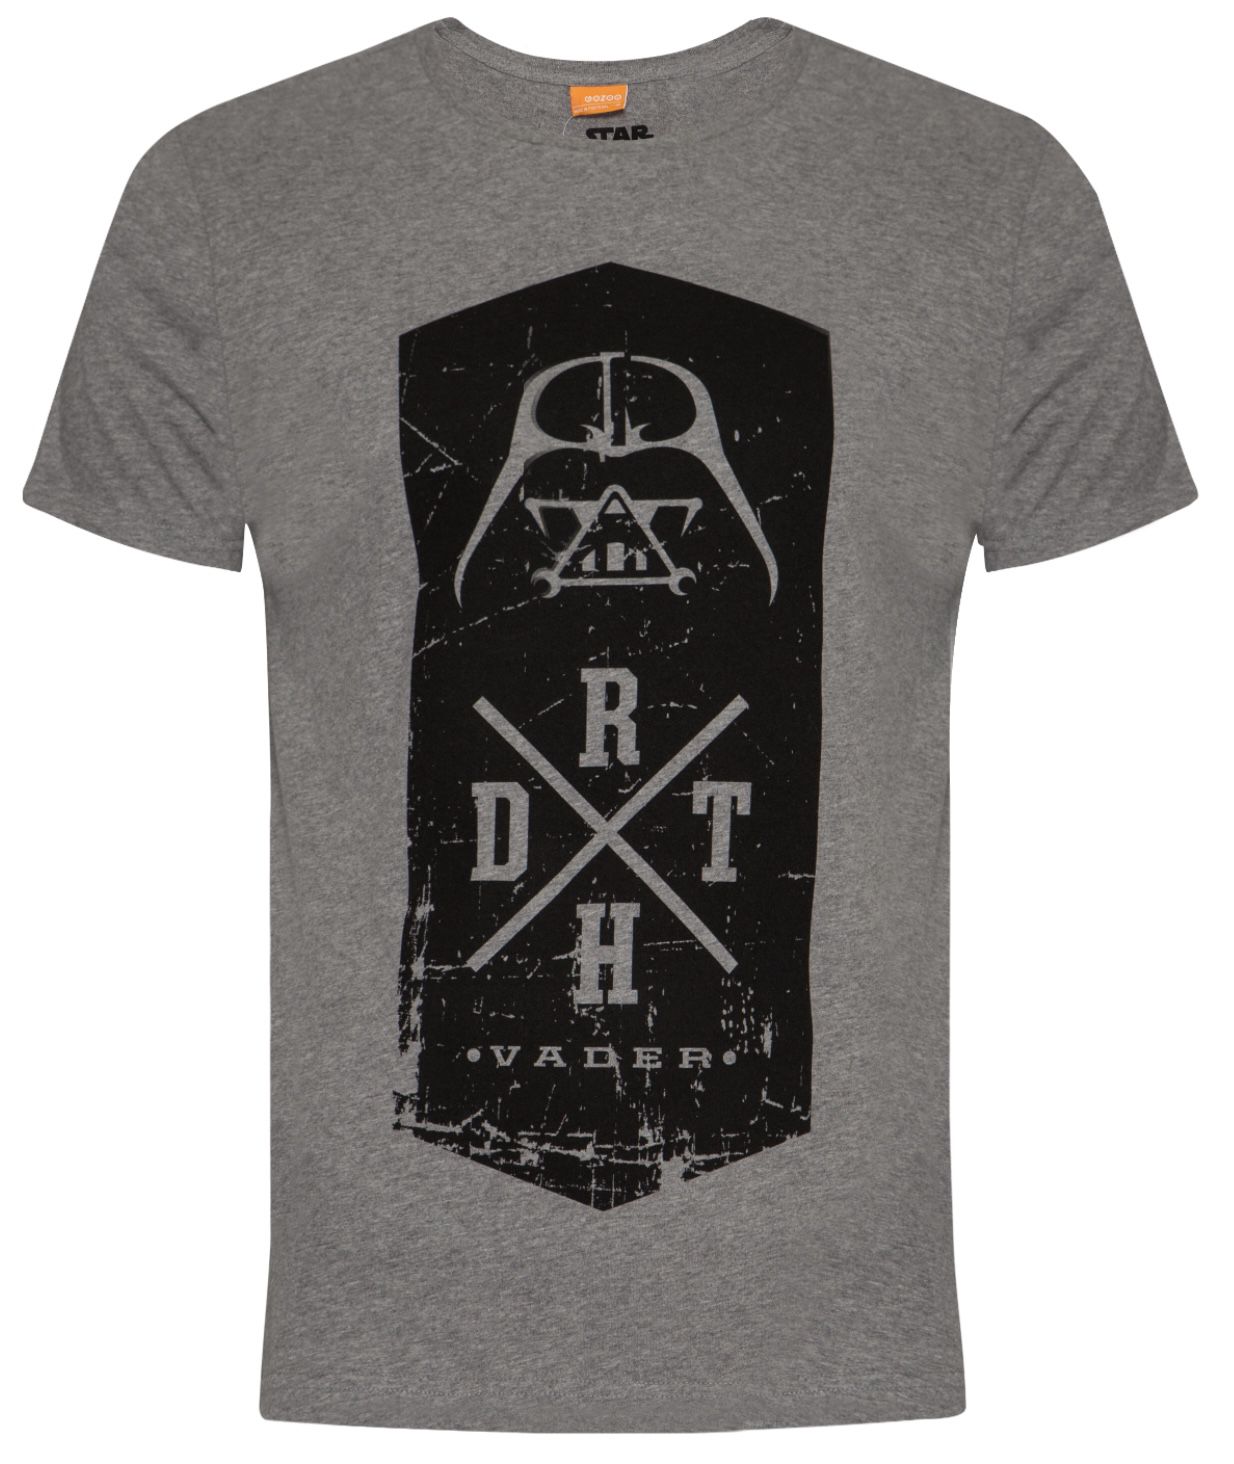 Gozoo x Star Wars T Shirts für je nur 6,99€ + VSK (statt 13€)